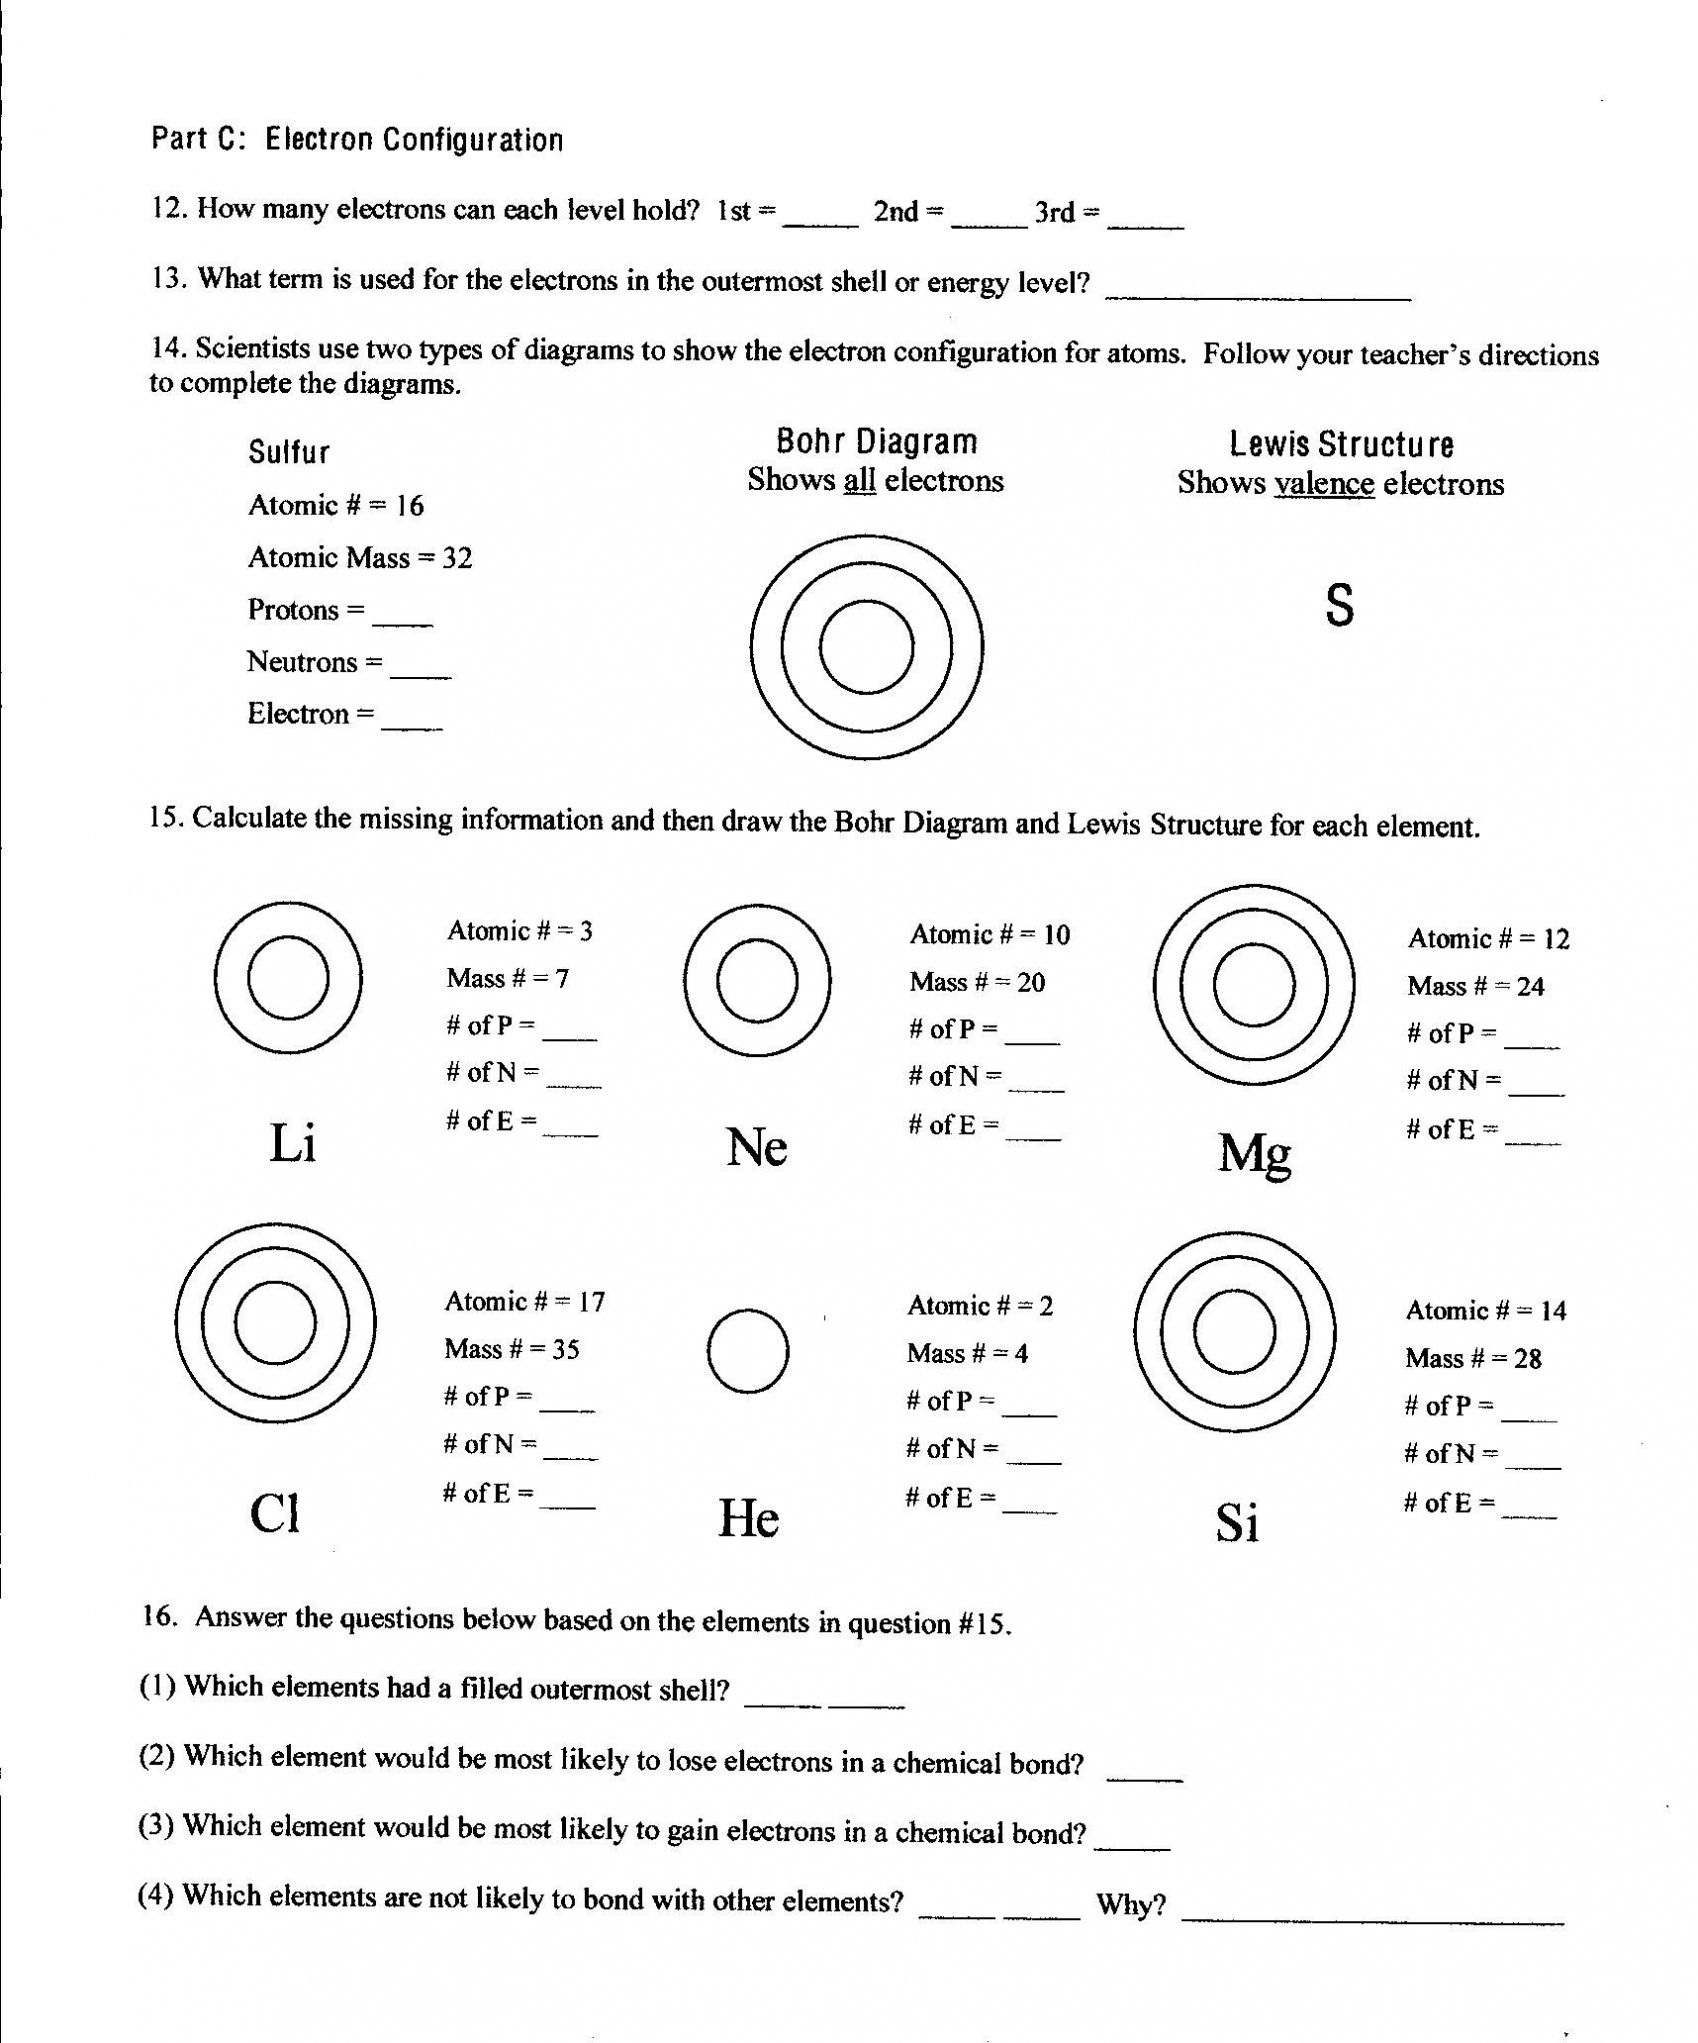 Covalent Bonding Worksheet Answers